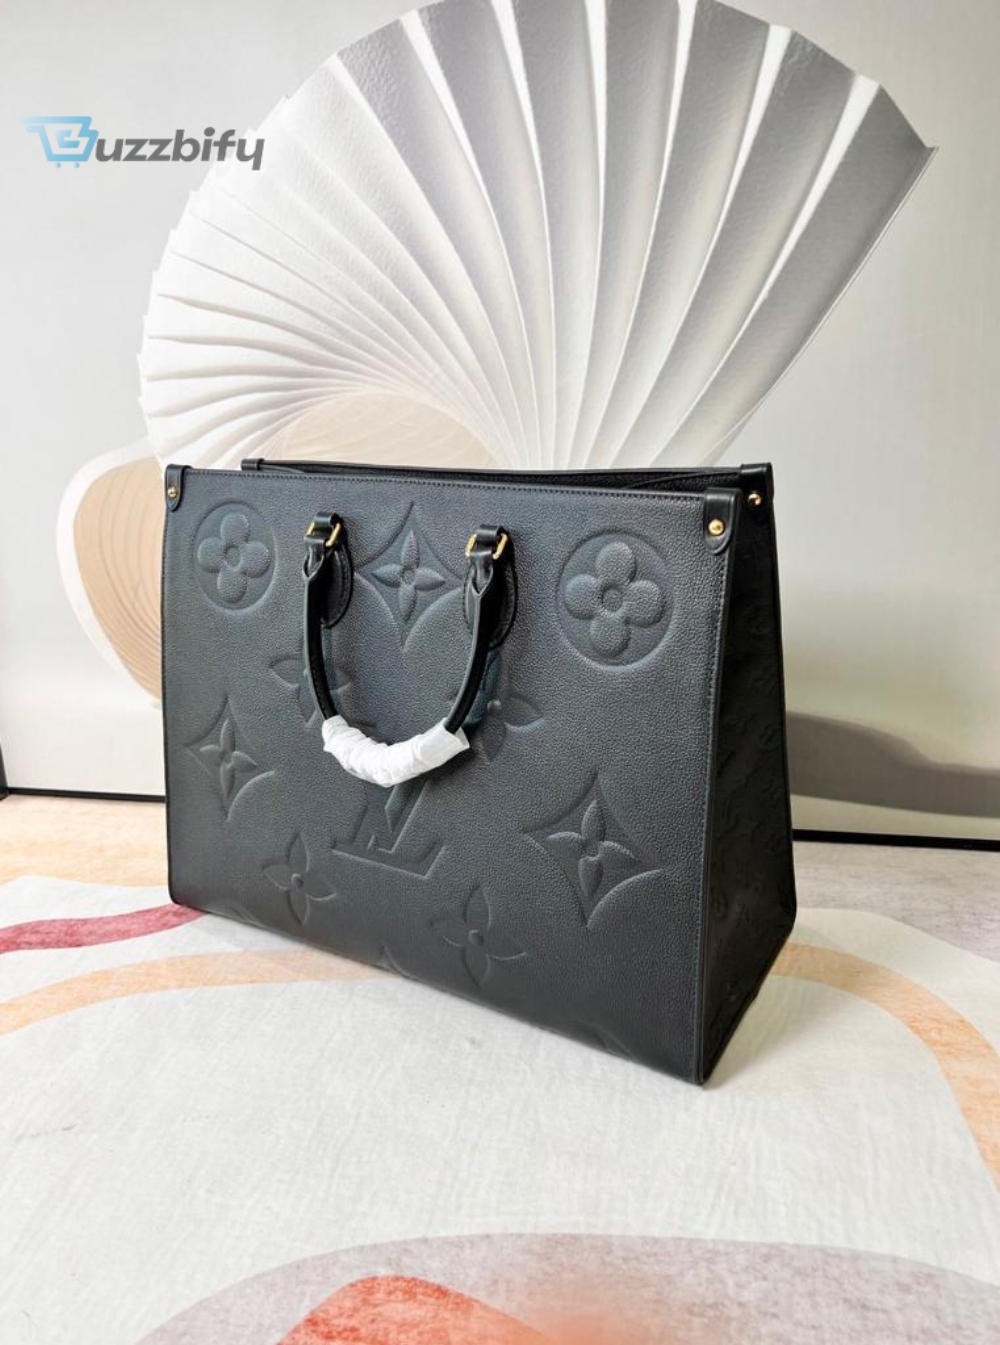 Louis Vuitton Onthego Gm Monogram Empreinte Tote Bag Black For Women 41Cm Lv M44925